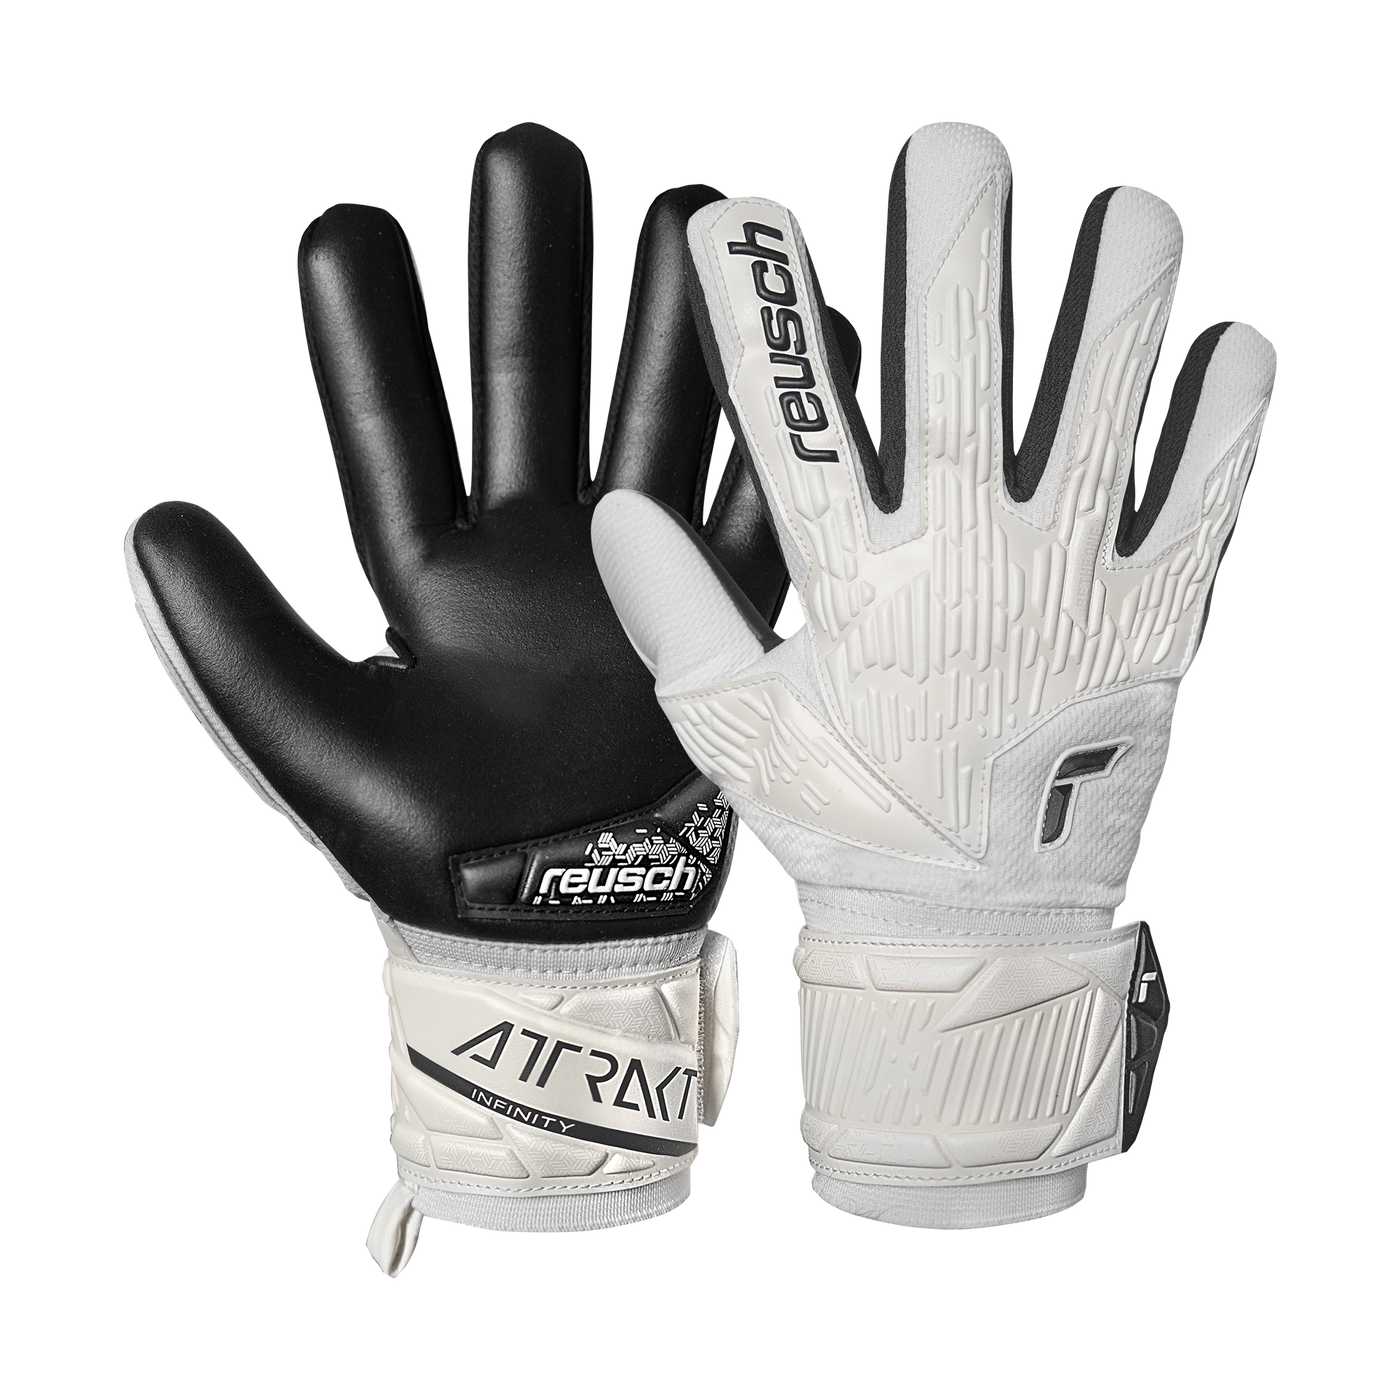 Воротарські рукавиці Reusch Attrakt Infinity NC White купити